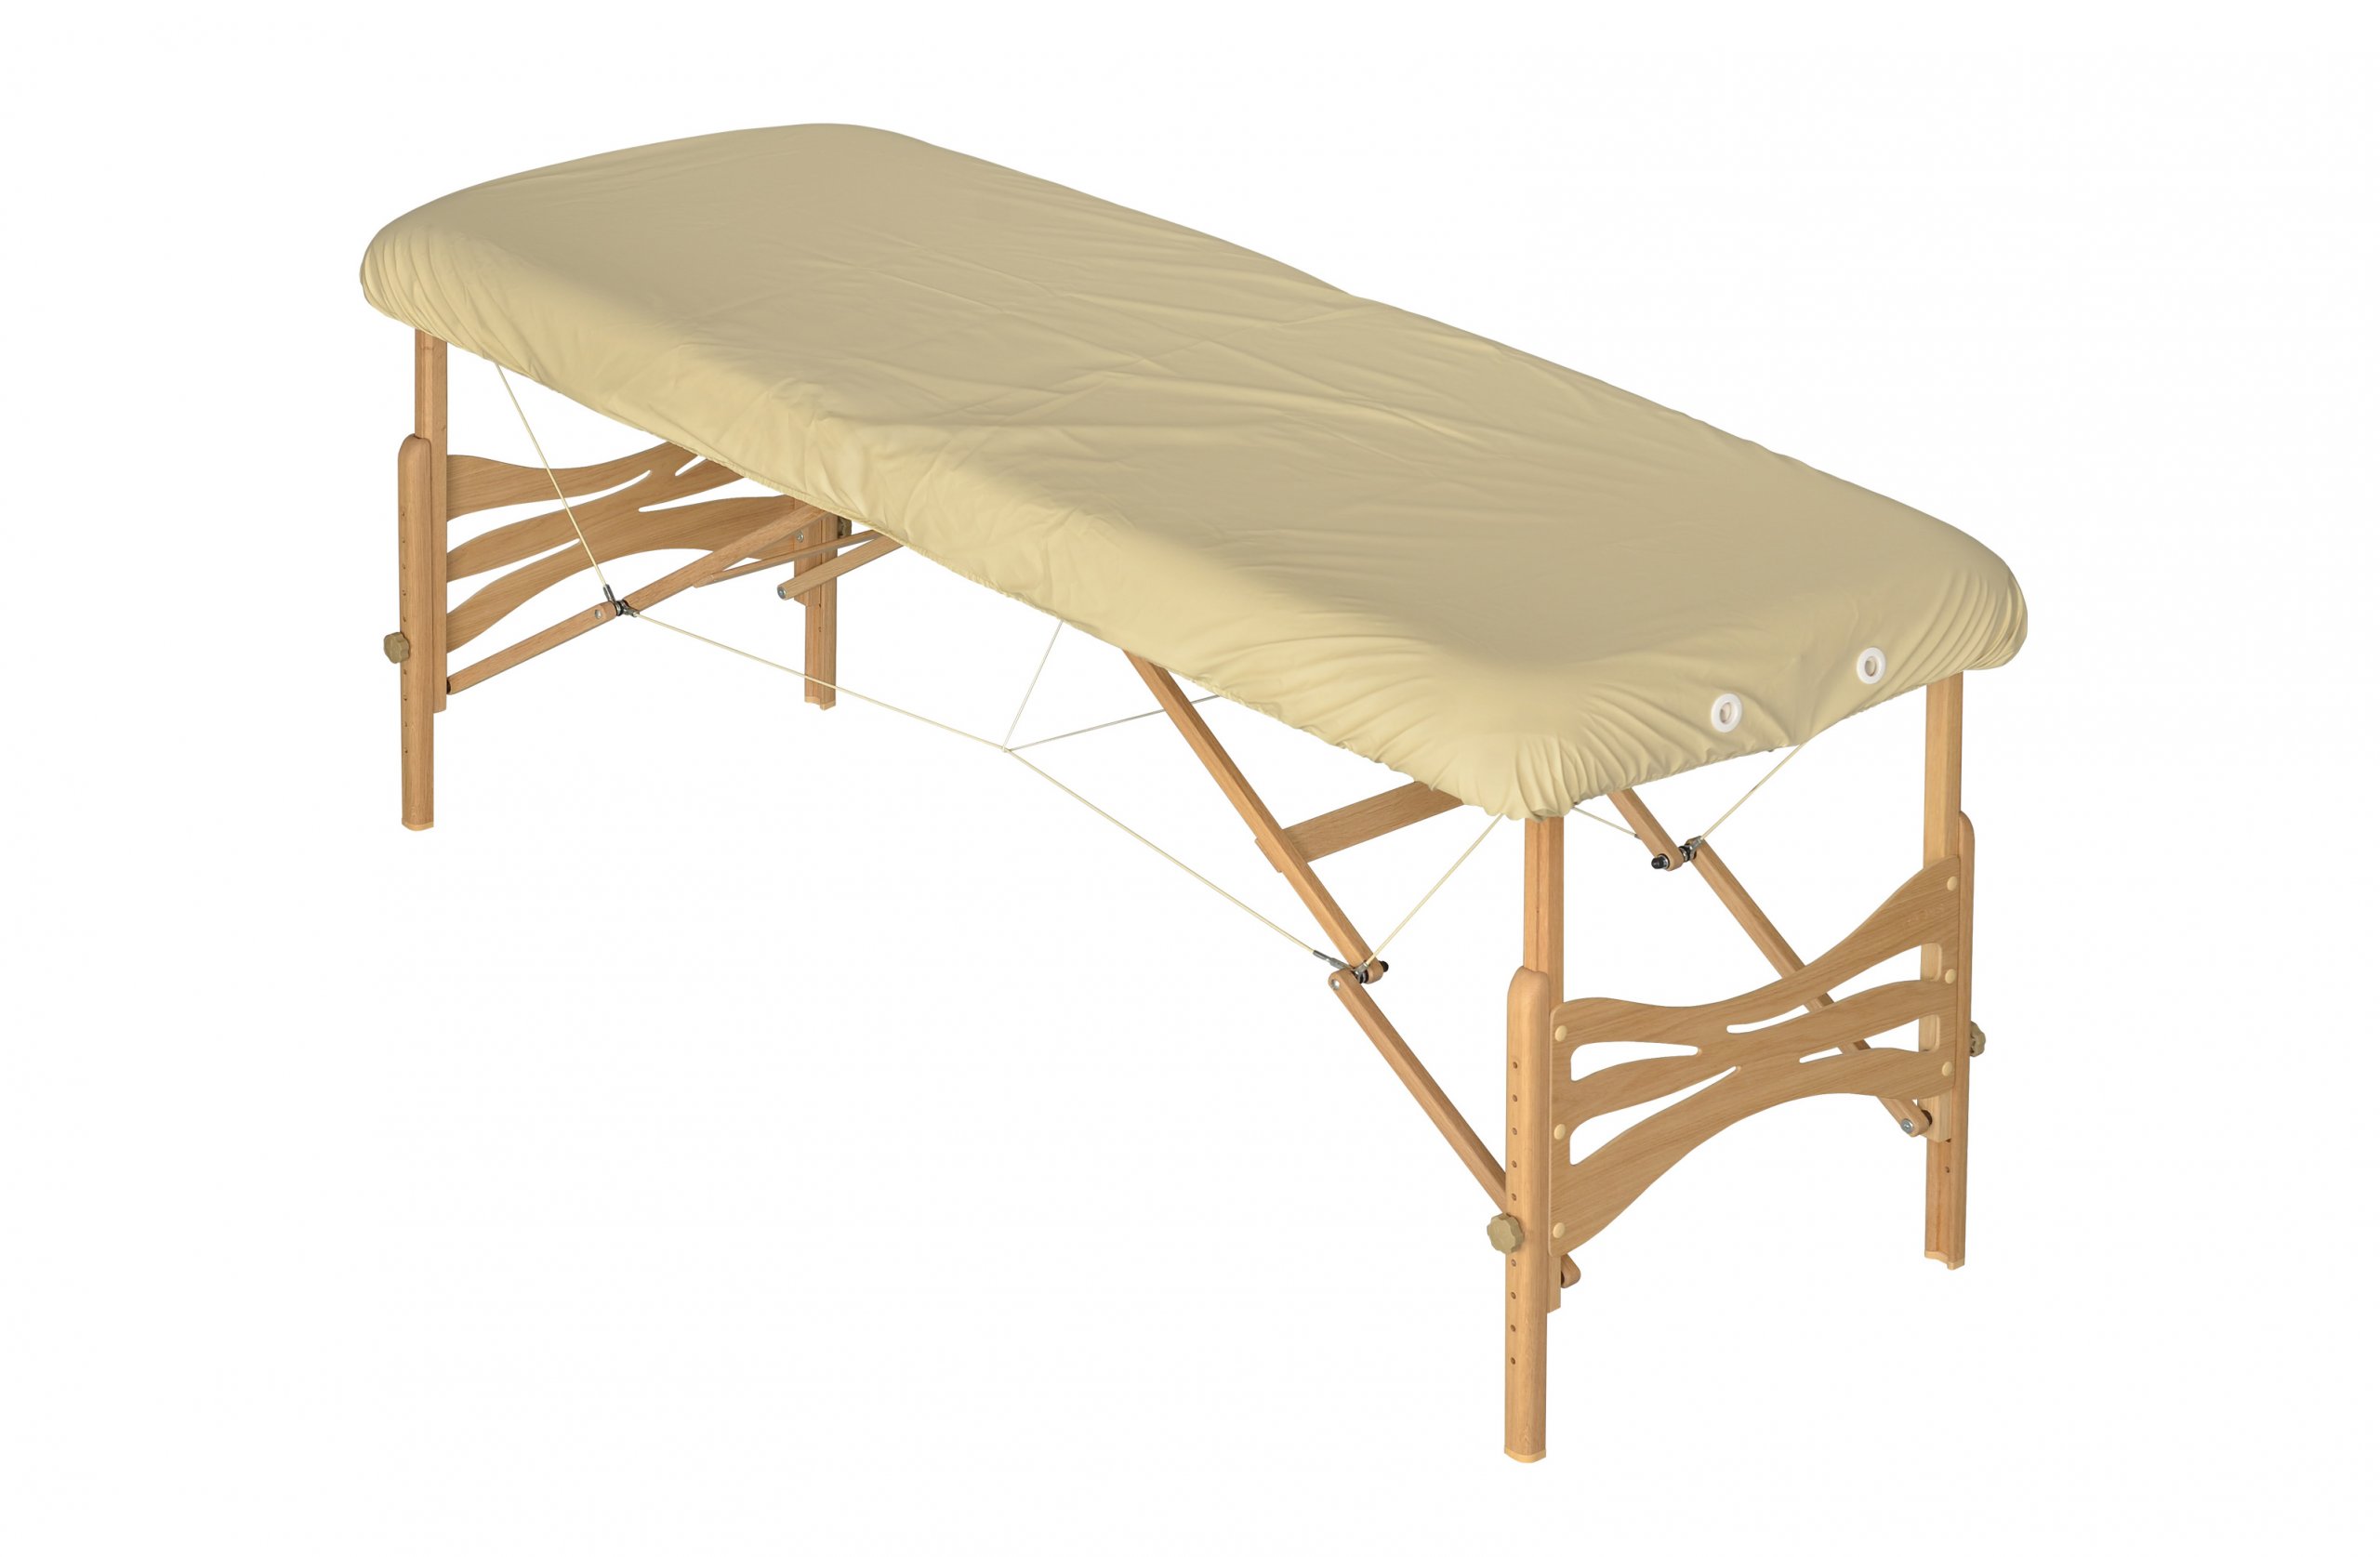 Чехол на массажный стол. Массажный стол Habys. Стол массажный из бамбука. Массажный стол из бамбука складной. Покрывало на массажный стол.